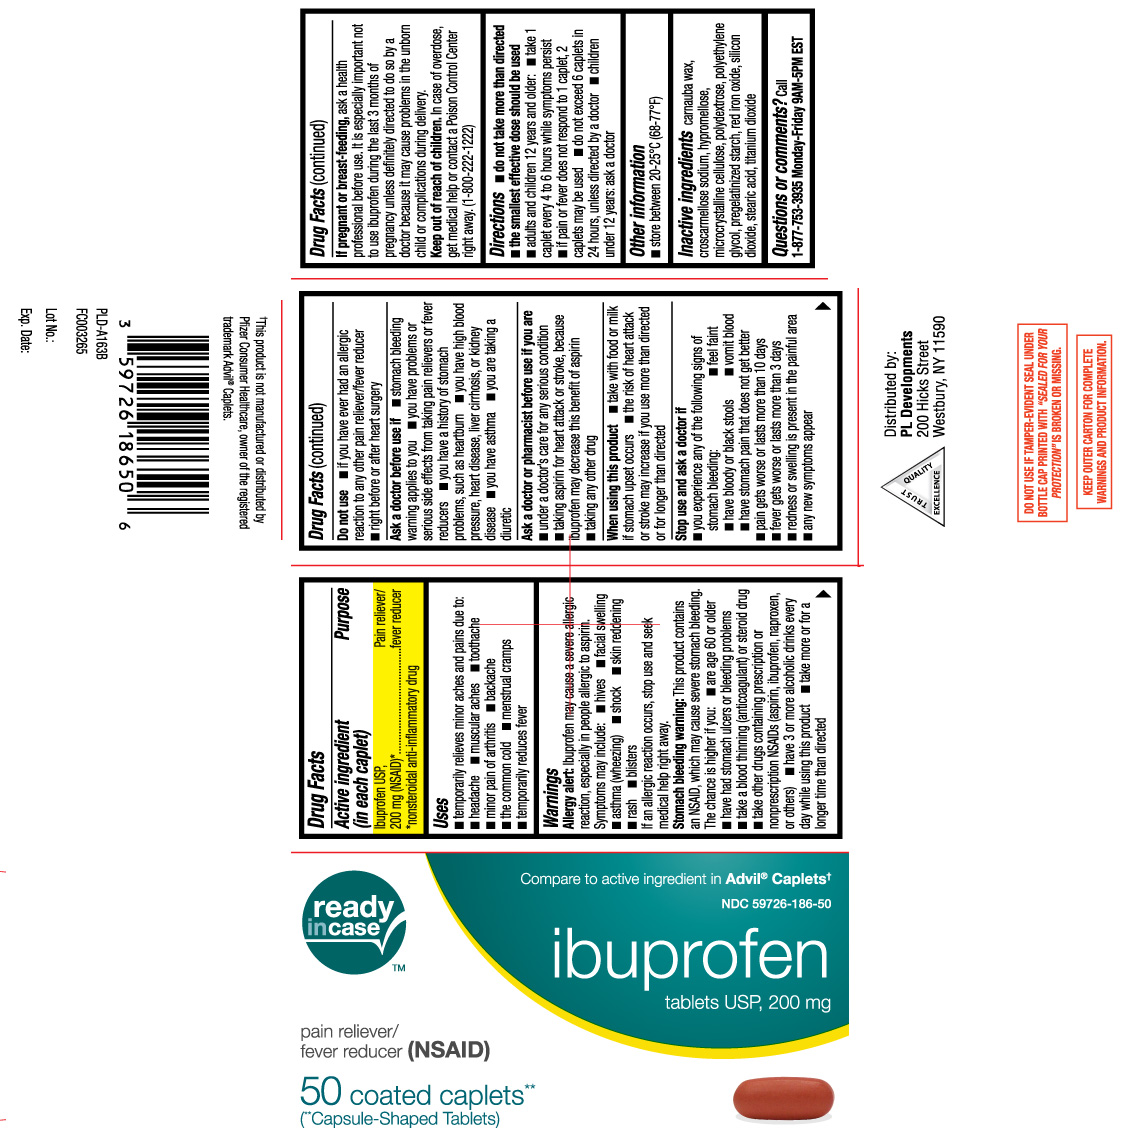 Ibuprofen USP 200 mg (NSAID) *nonsteroidal anti-inflammatory drug